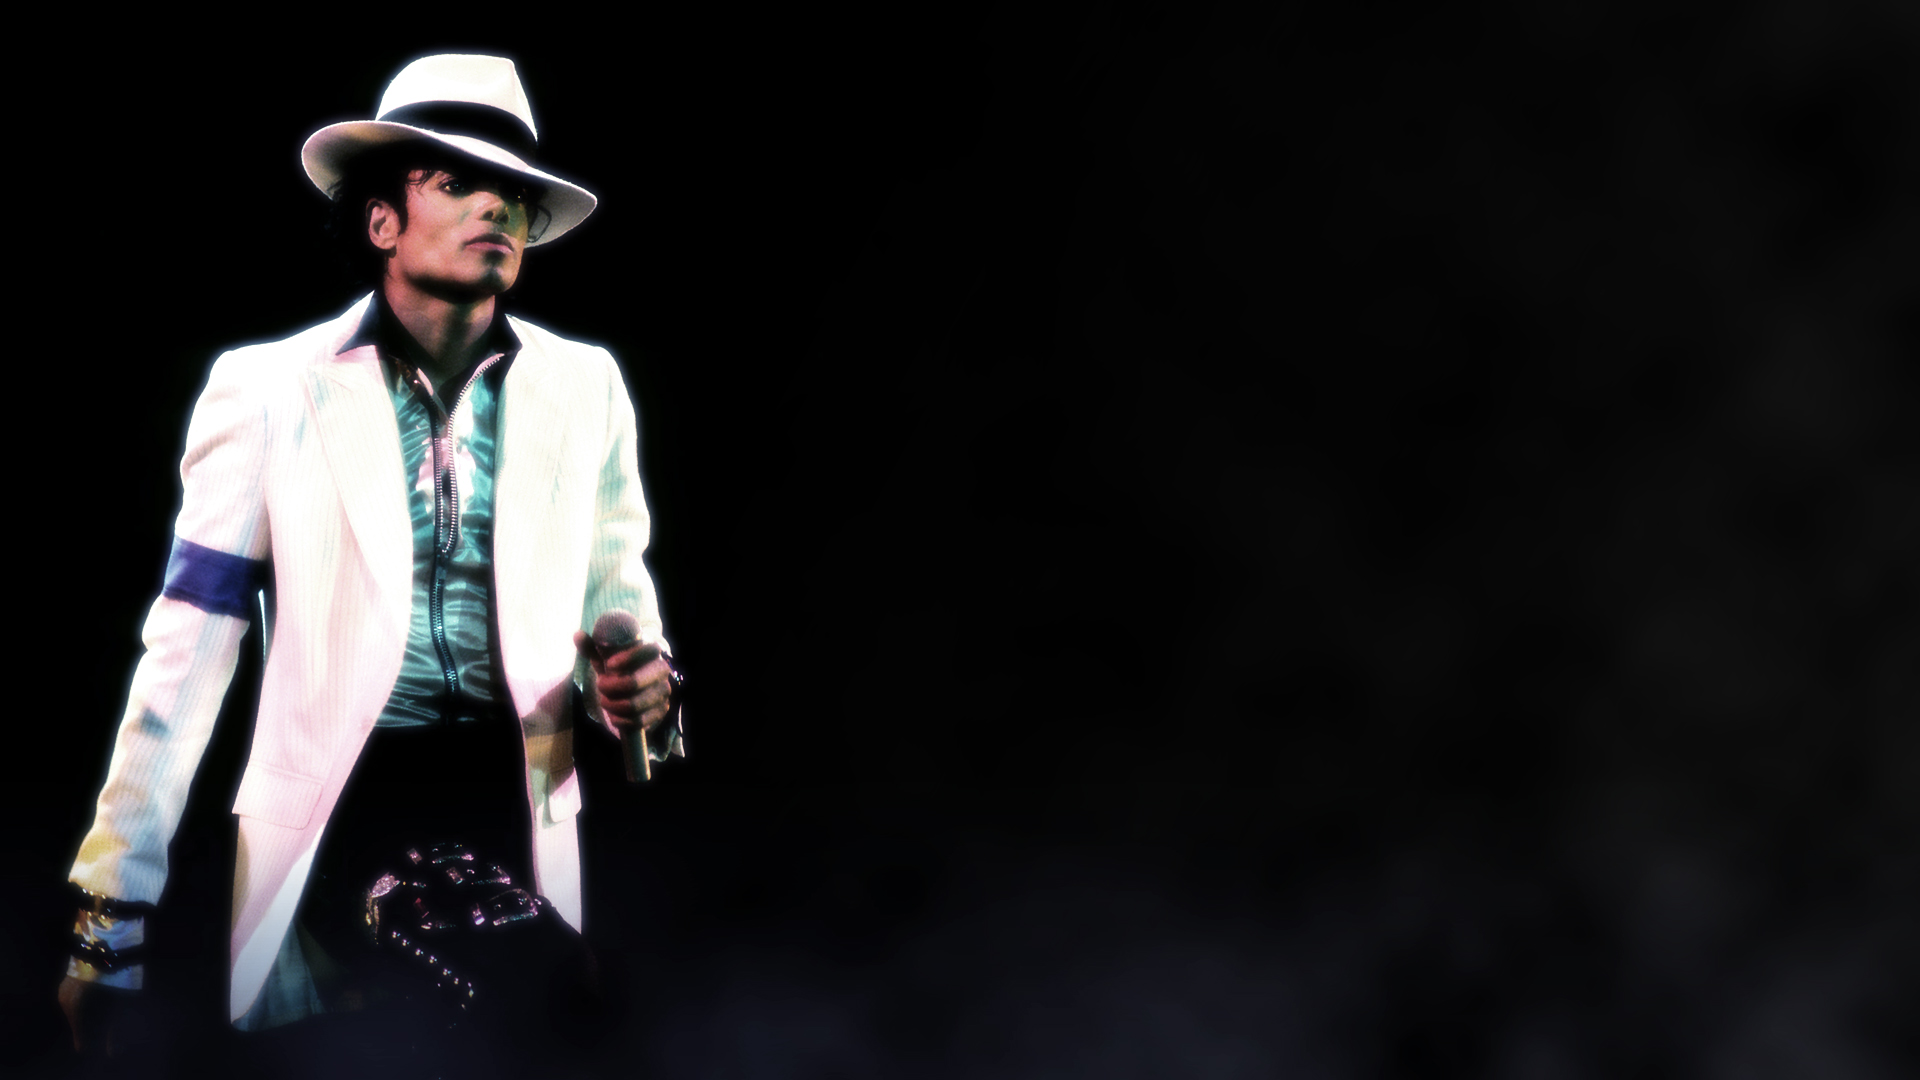 Michael Jackson Wallpaper Hd Download 10992 Wallpaper Wallpaper hd